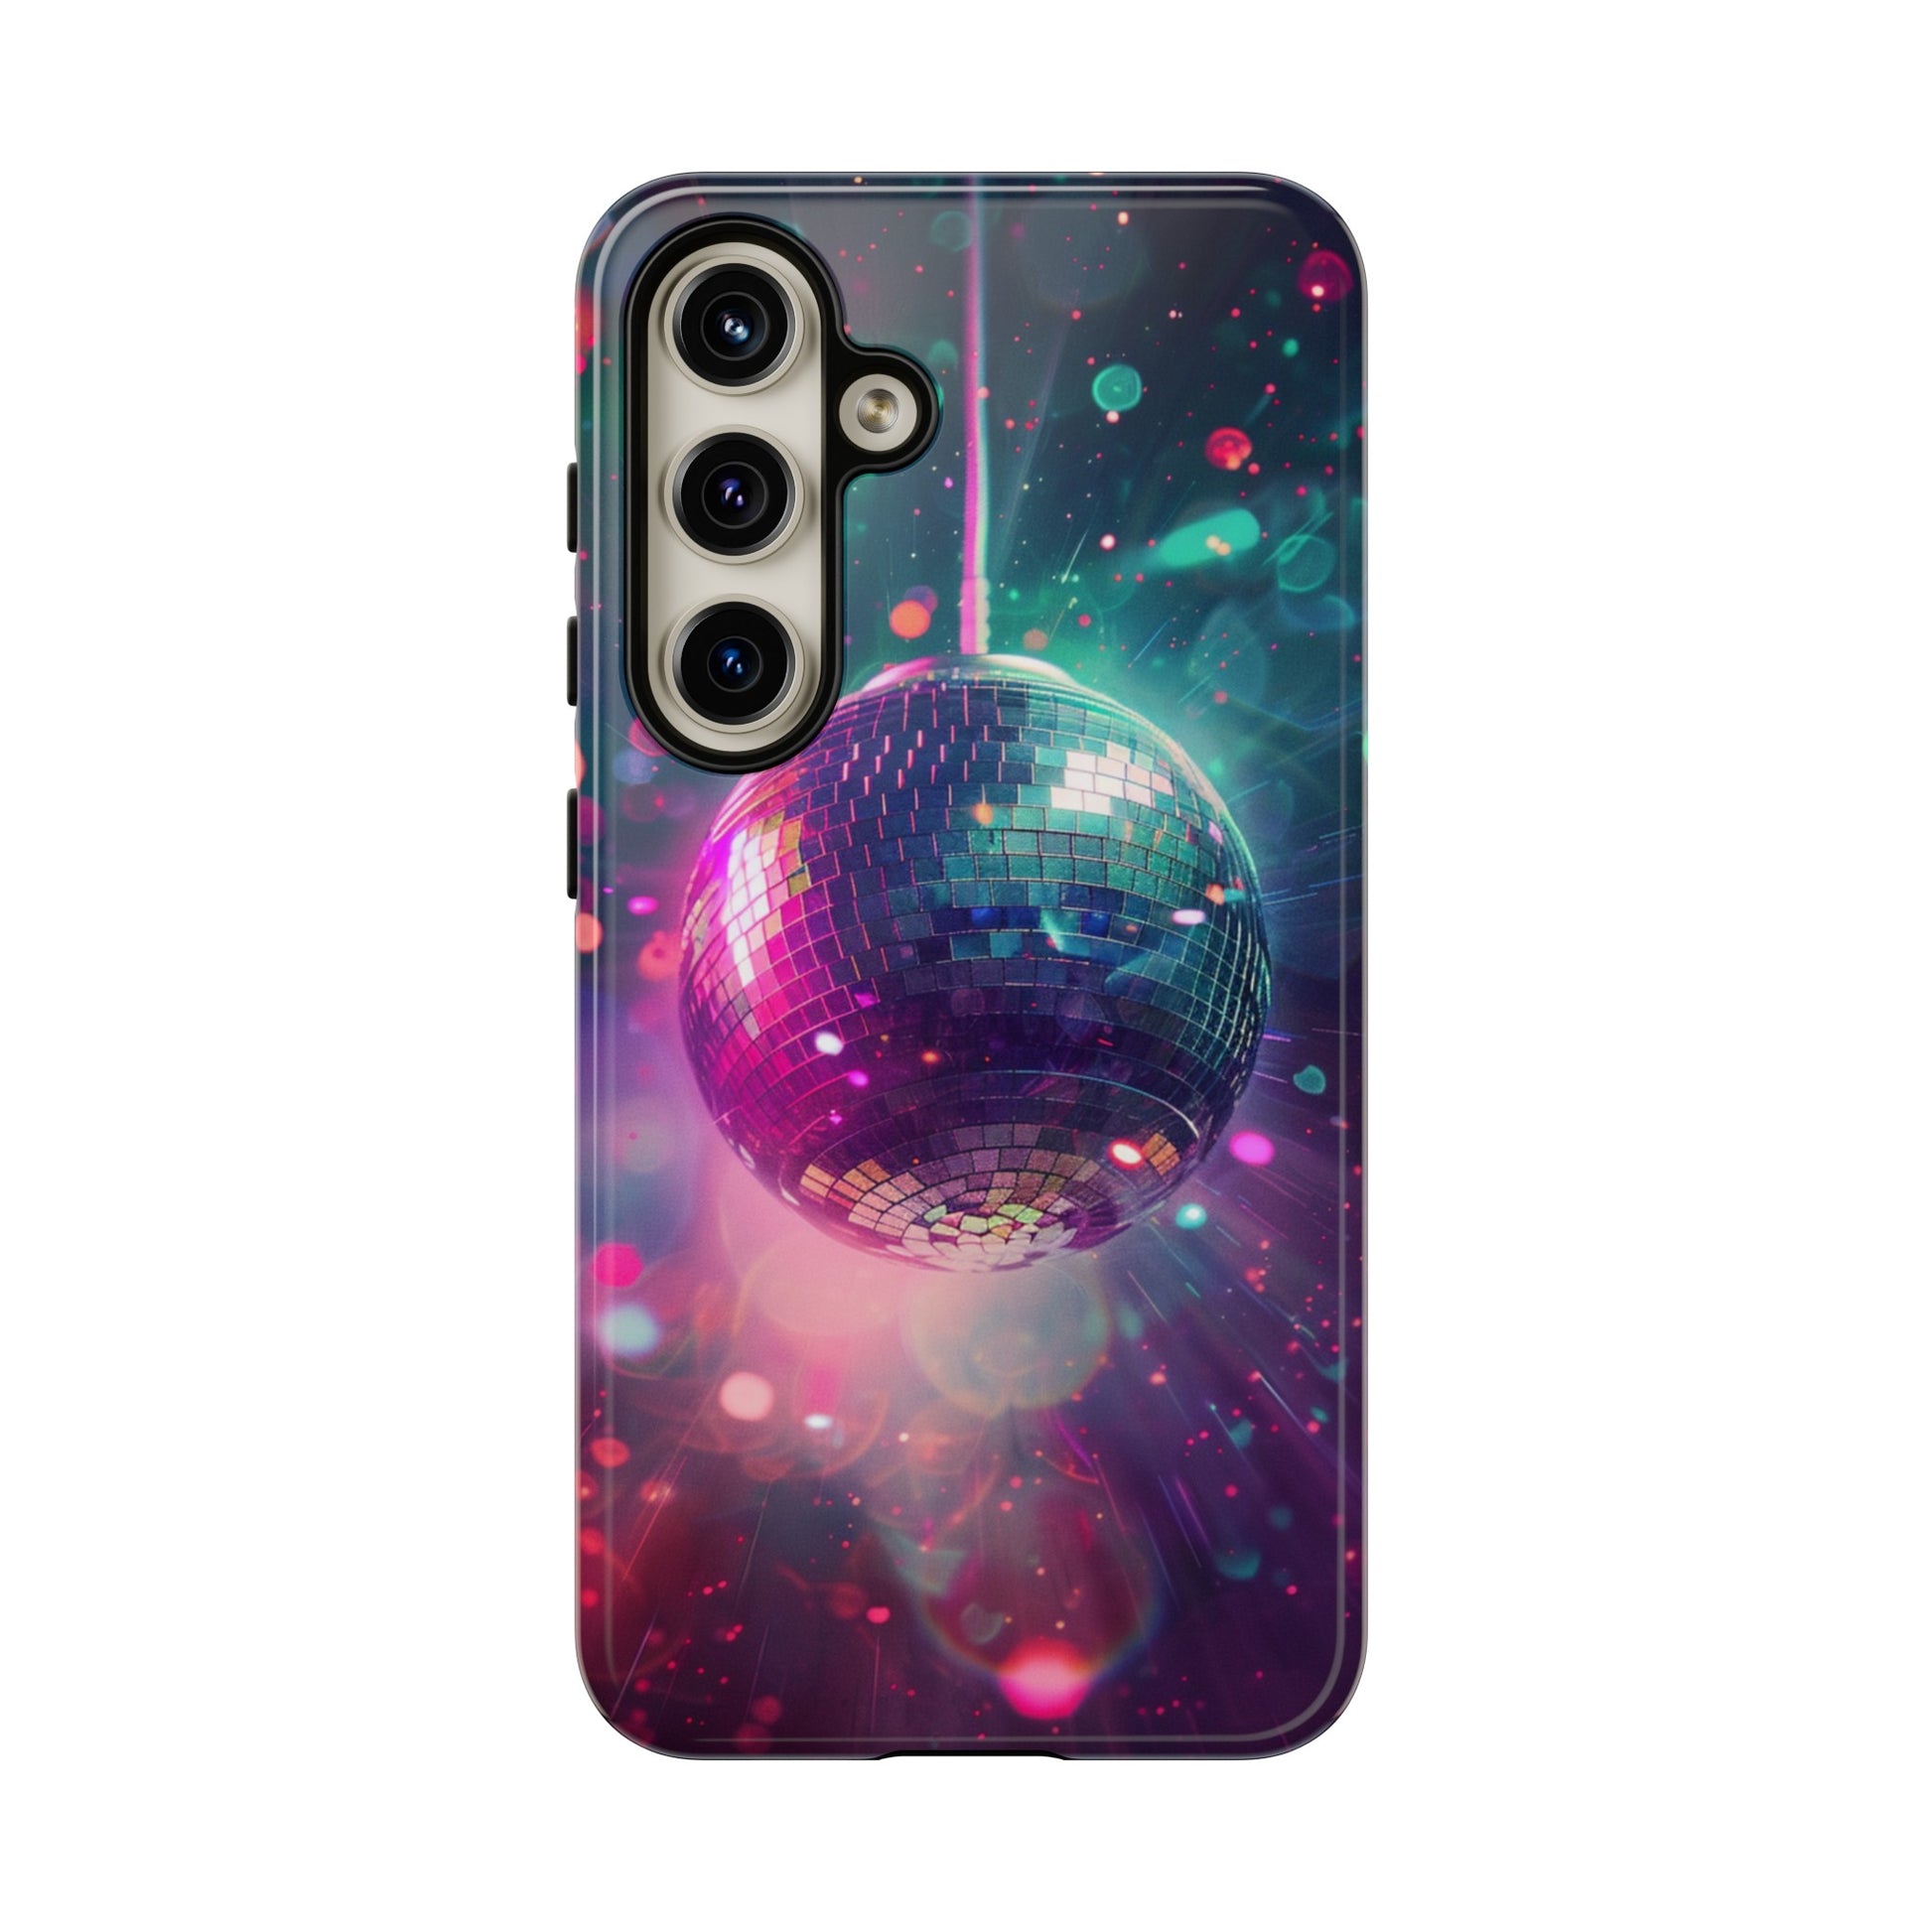 Disco phone case